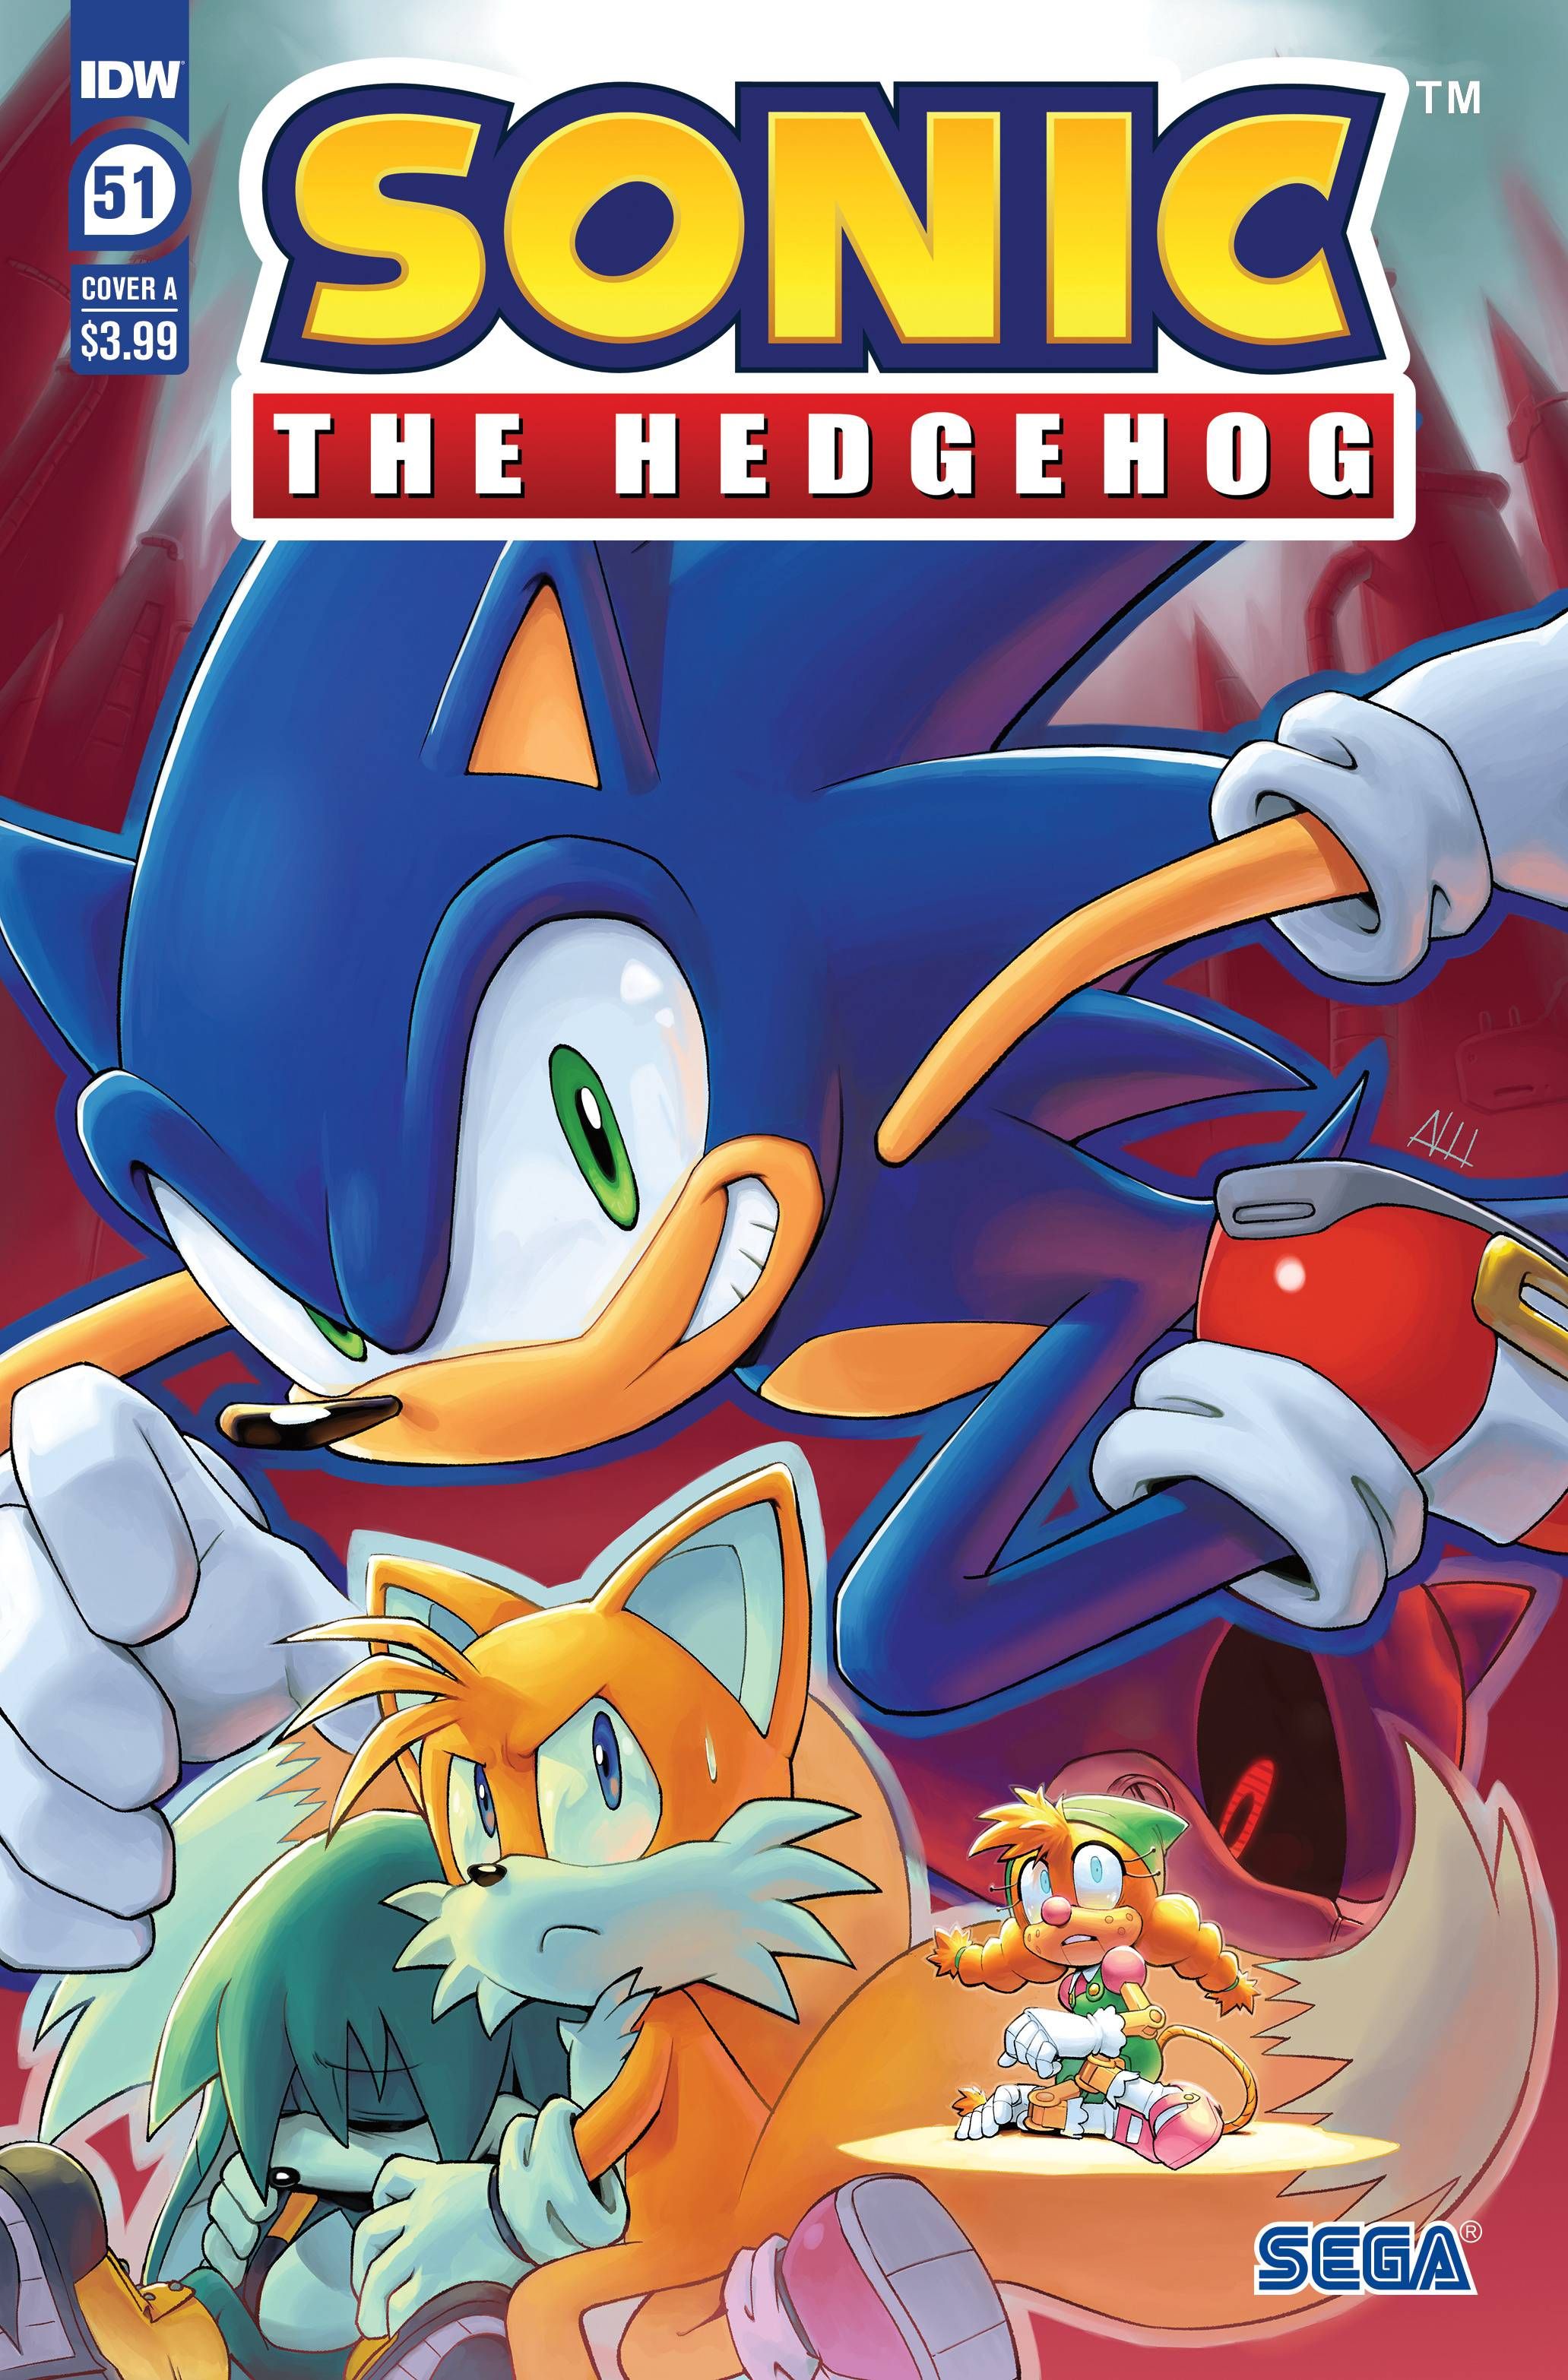 Sonic the Hedgehog #51 Comic